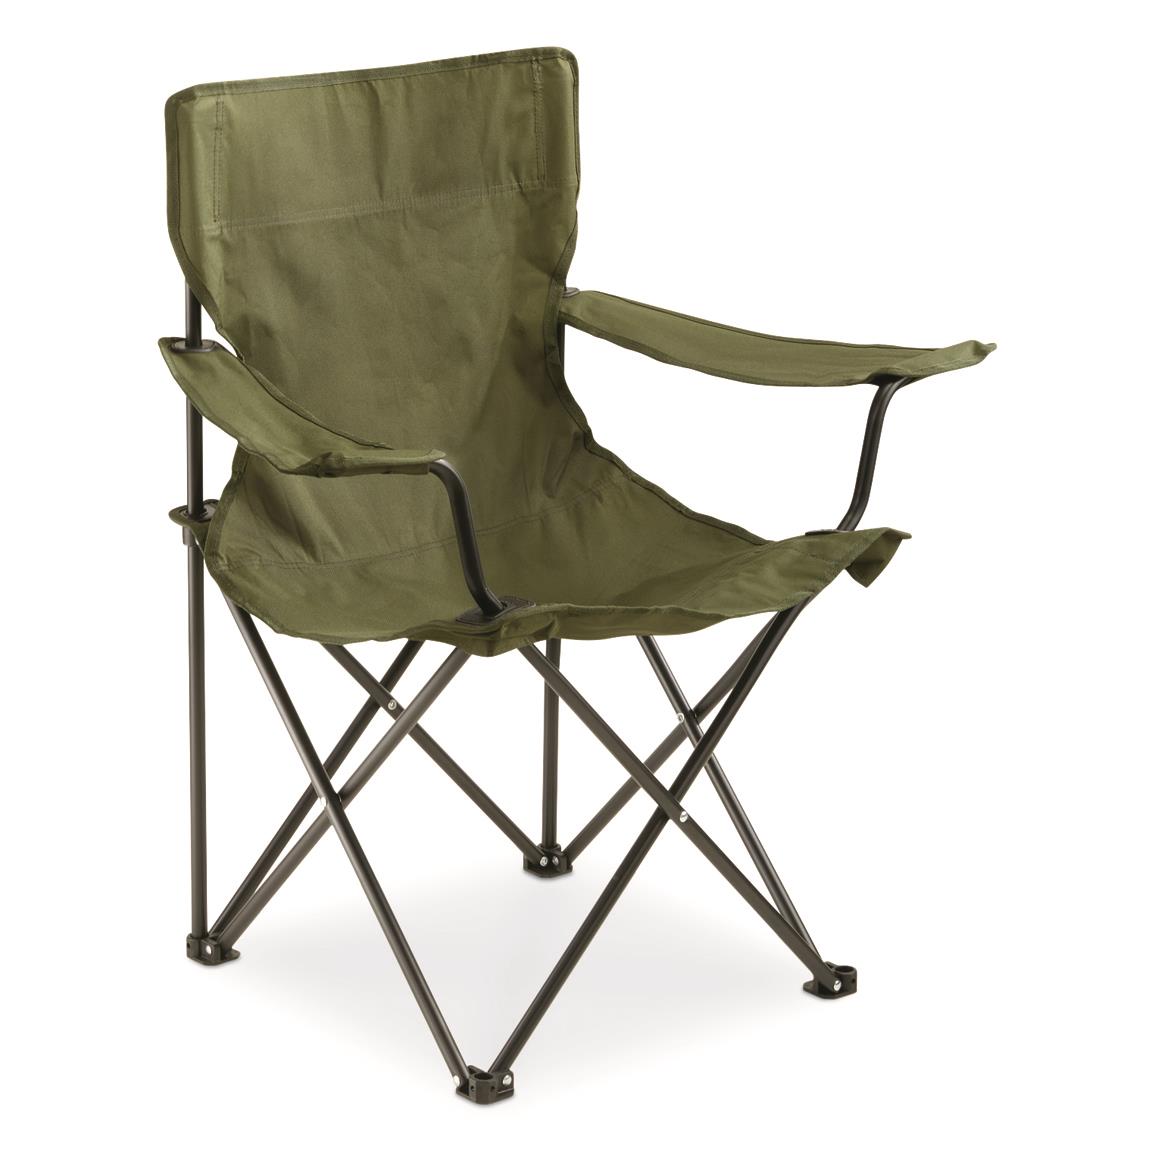 British Military Surplus Nylon Canvas Camp Chair, New, Olive Drab